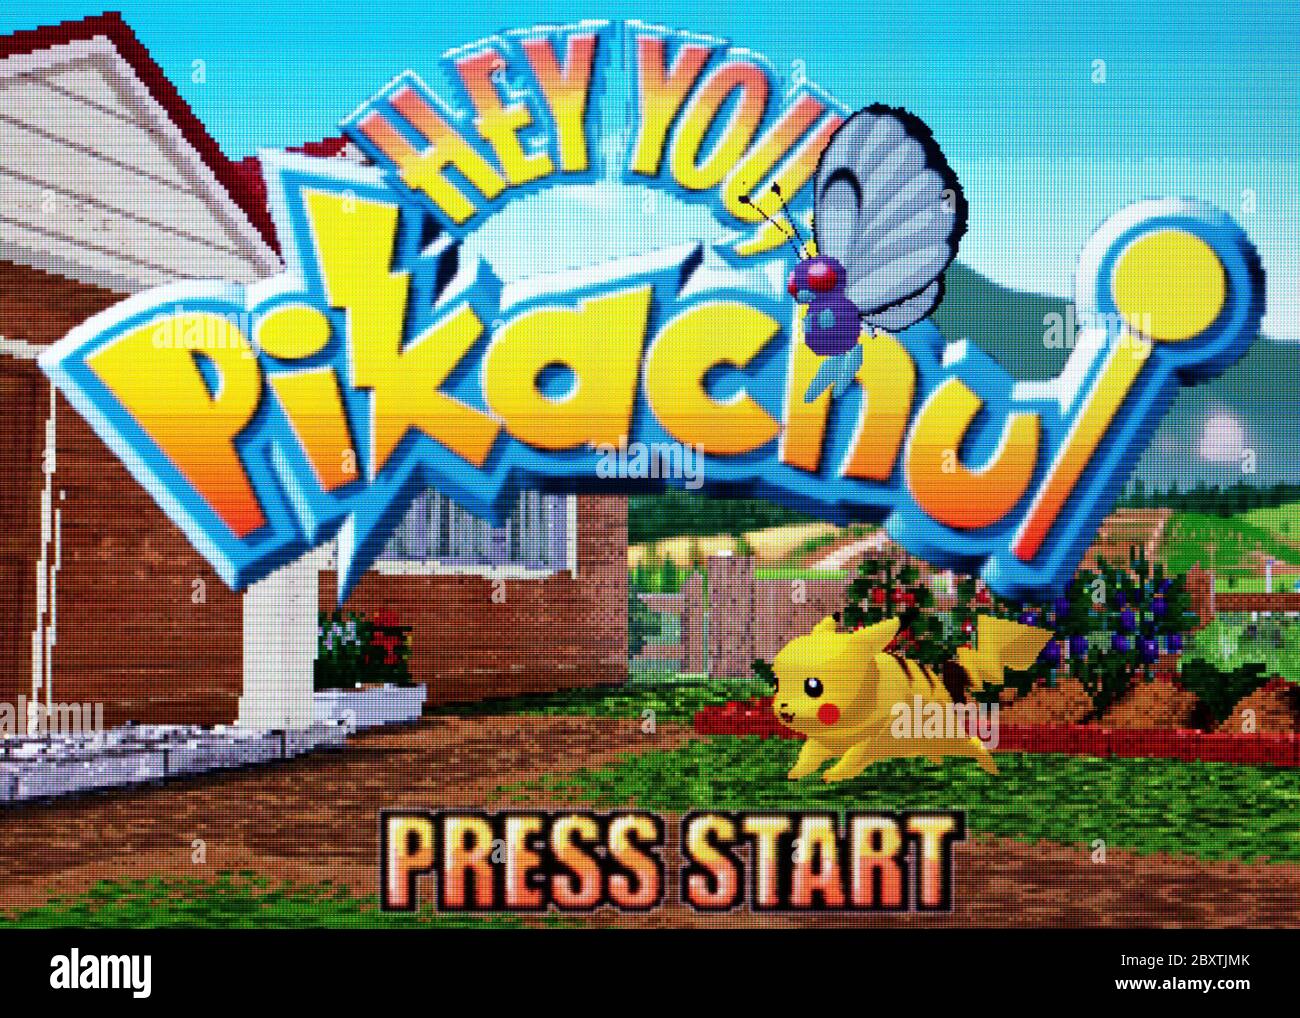 Hey You Pikachu Nintendo 64 Videogame Editorial Use Only Stock Photo Alamy